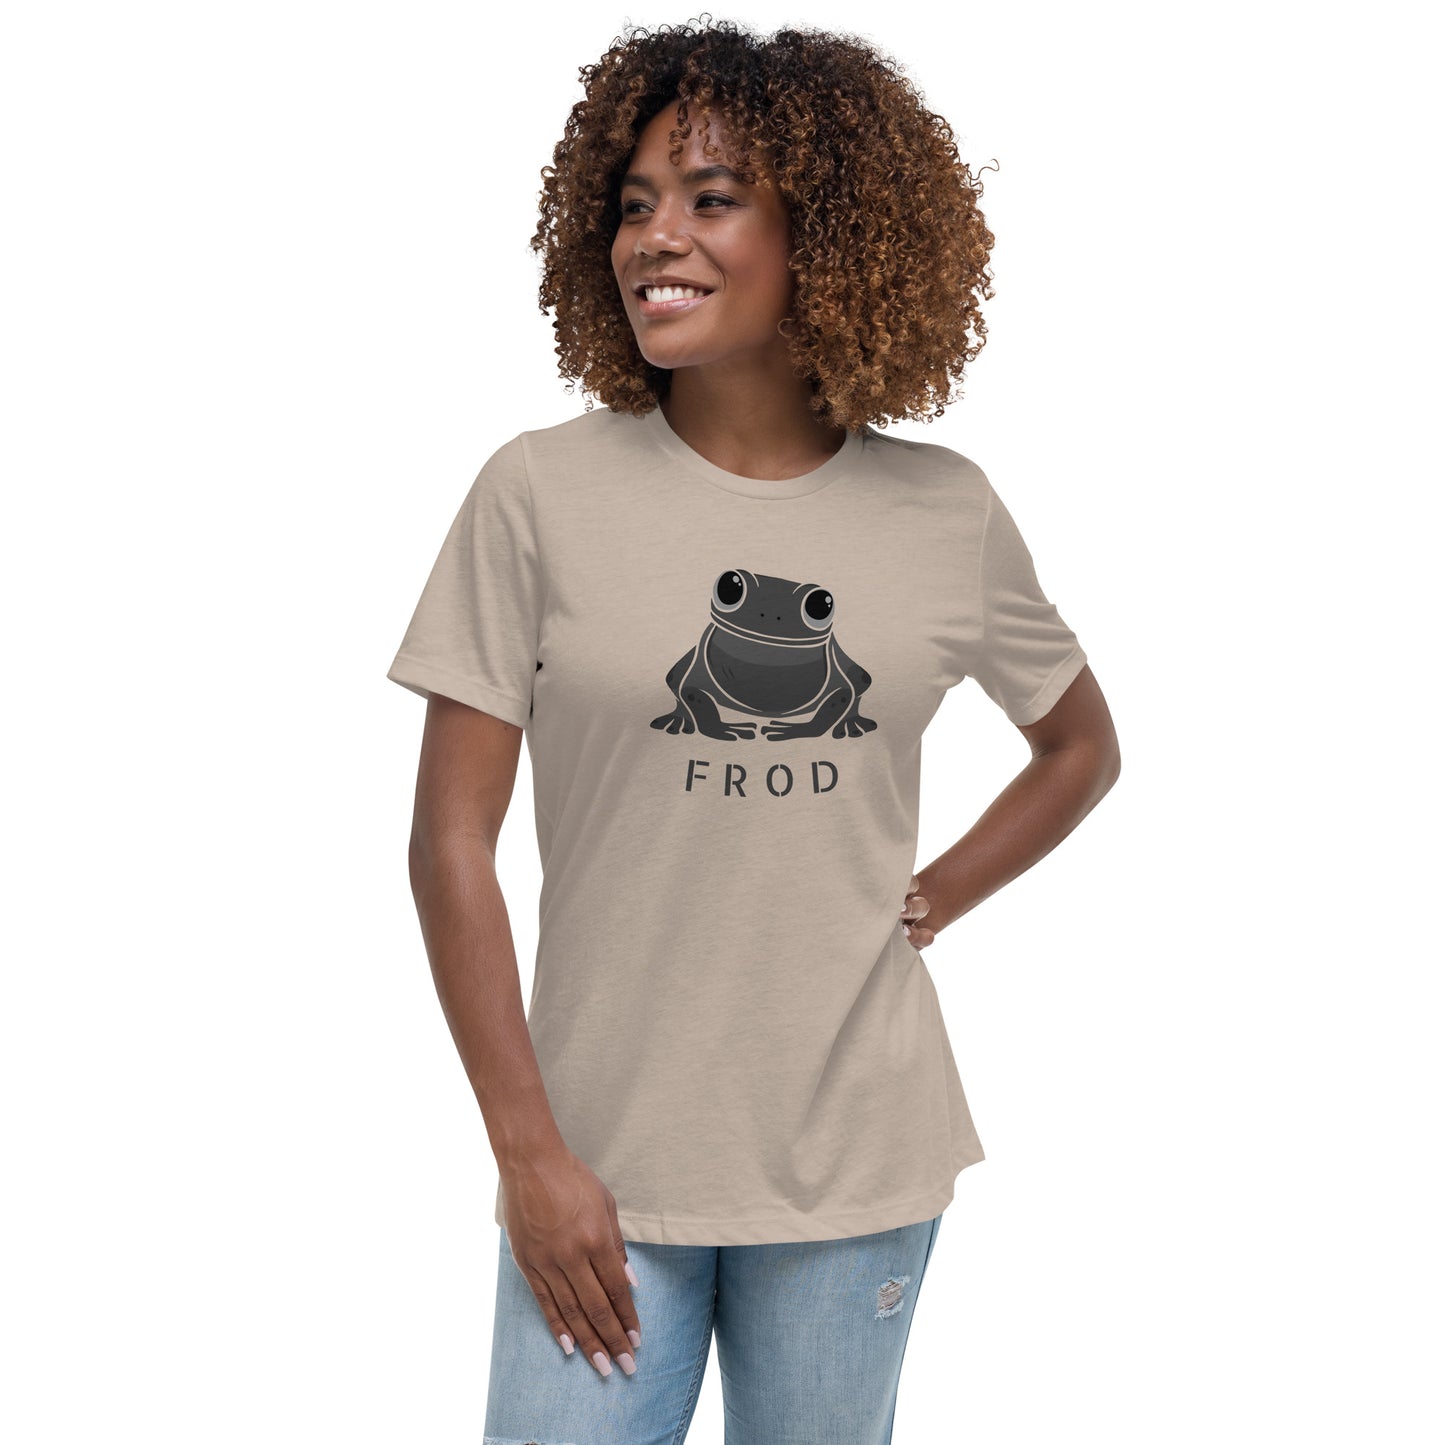 Big Frod | Women's Relaxed T-Shirt